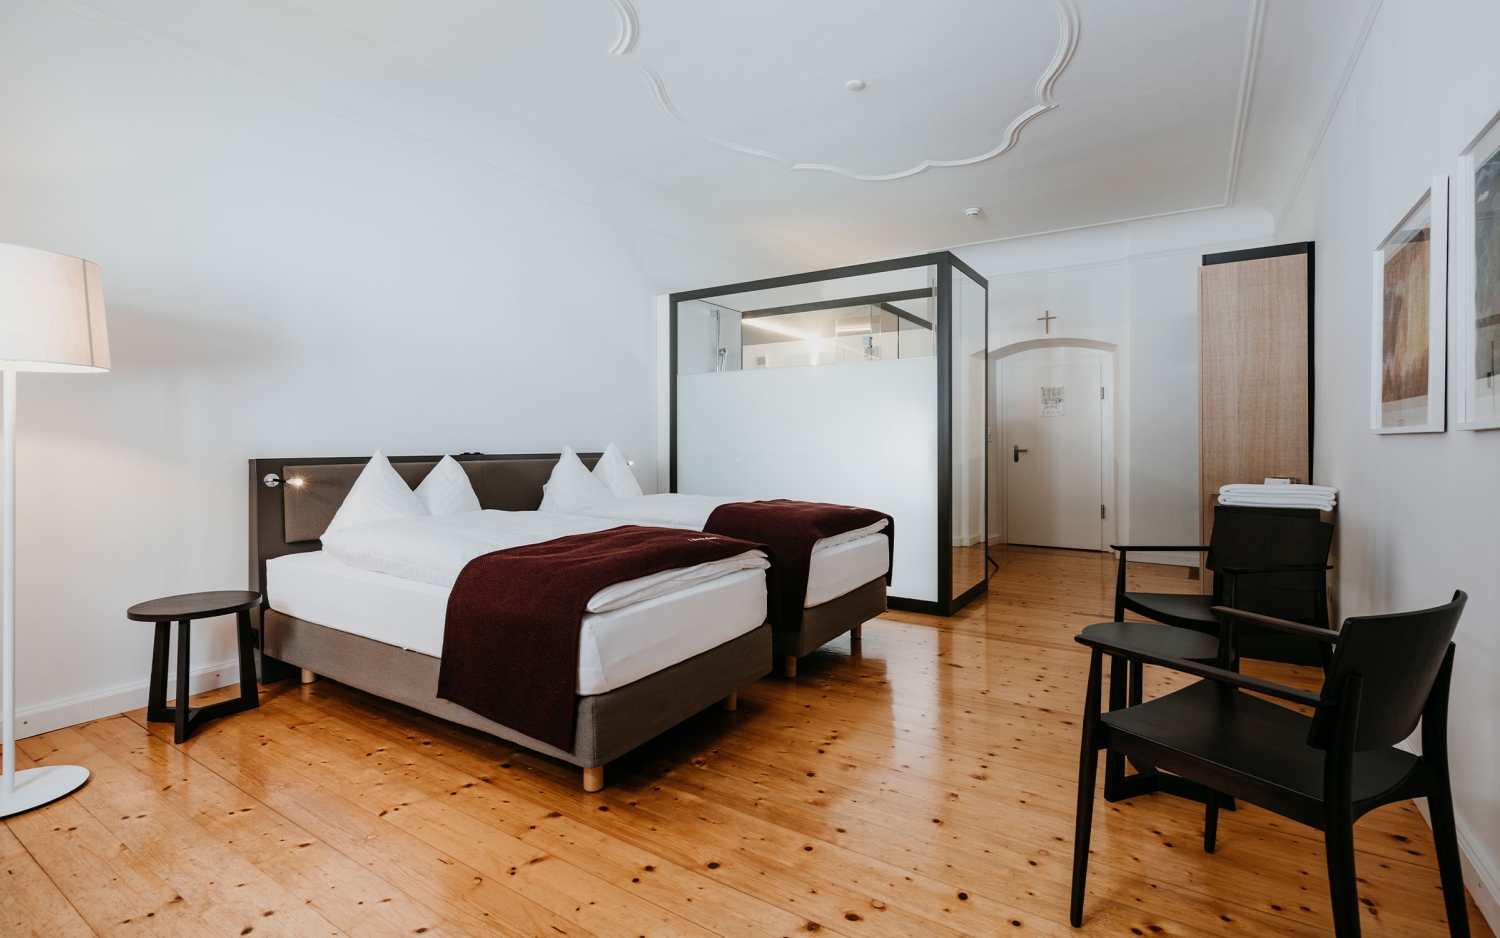 Zimmer kloster fischingen swiss historic hotels 02